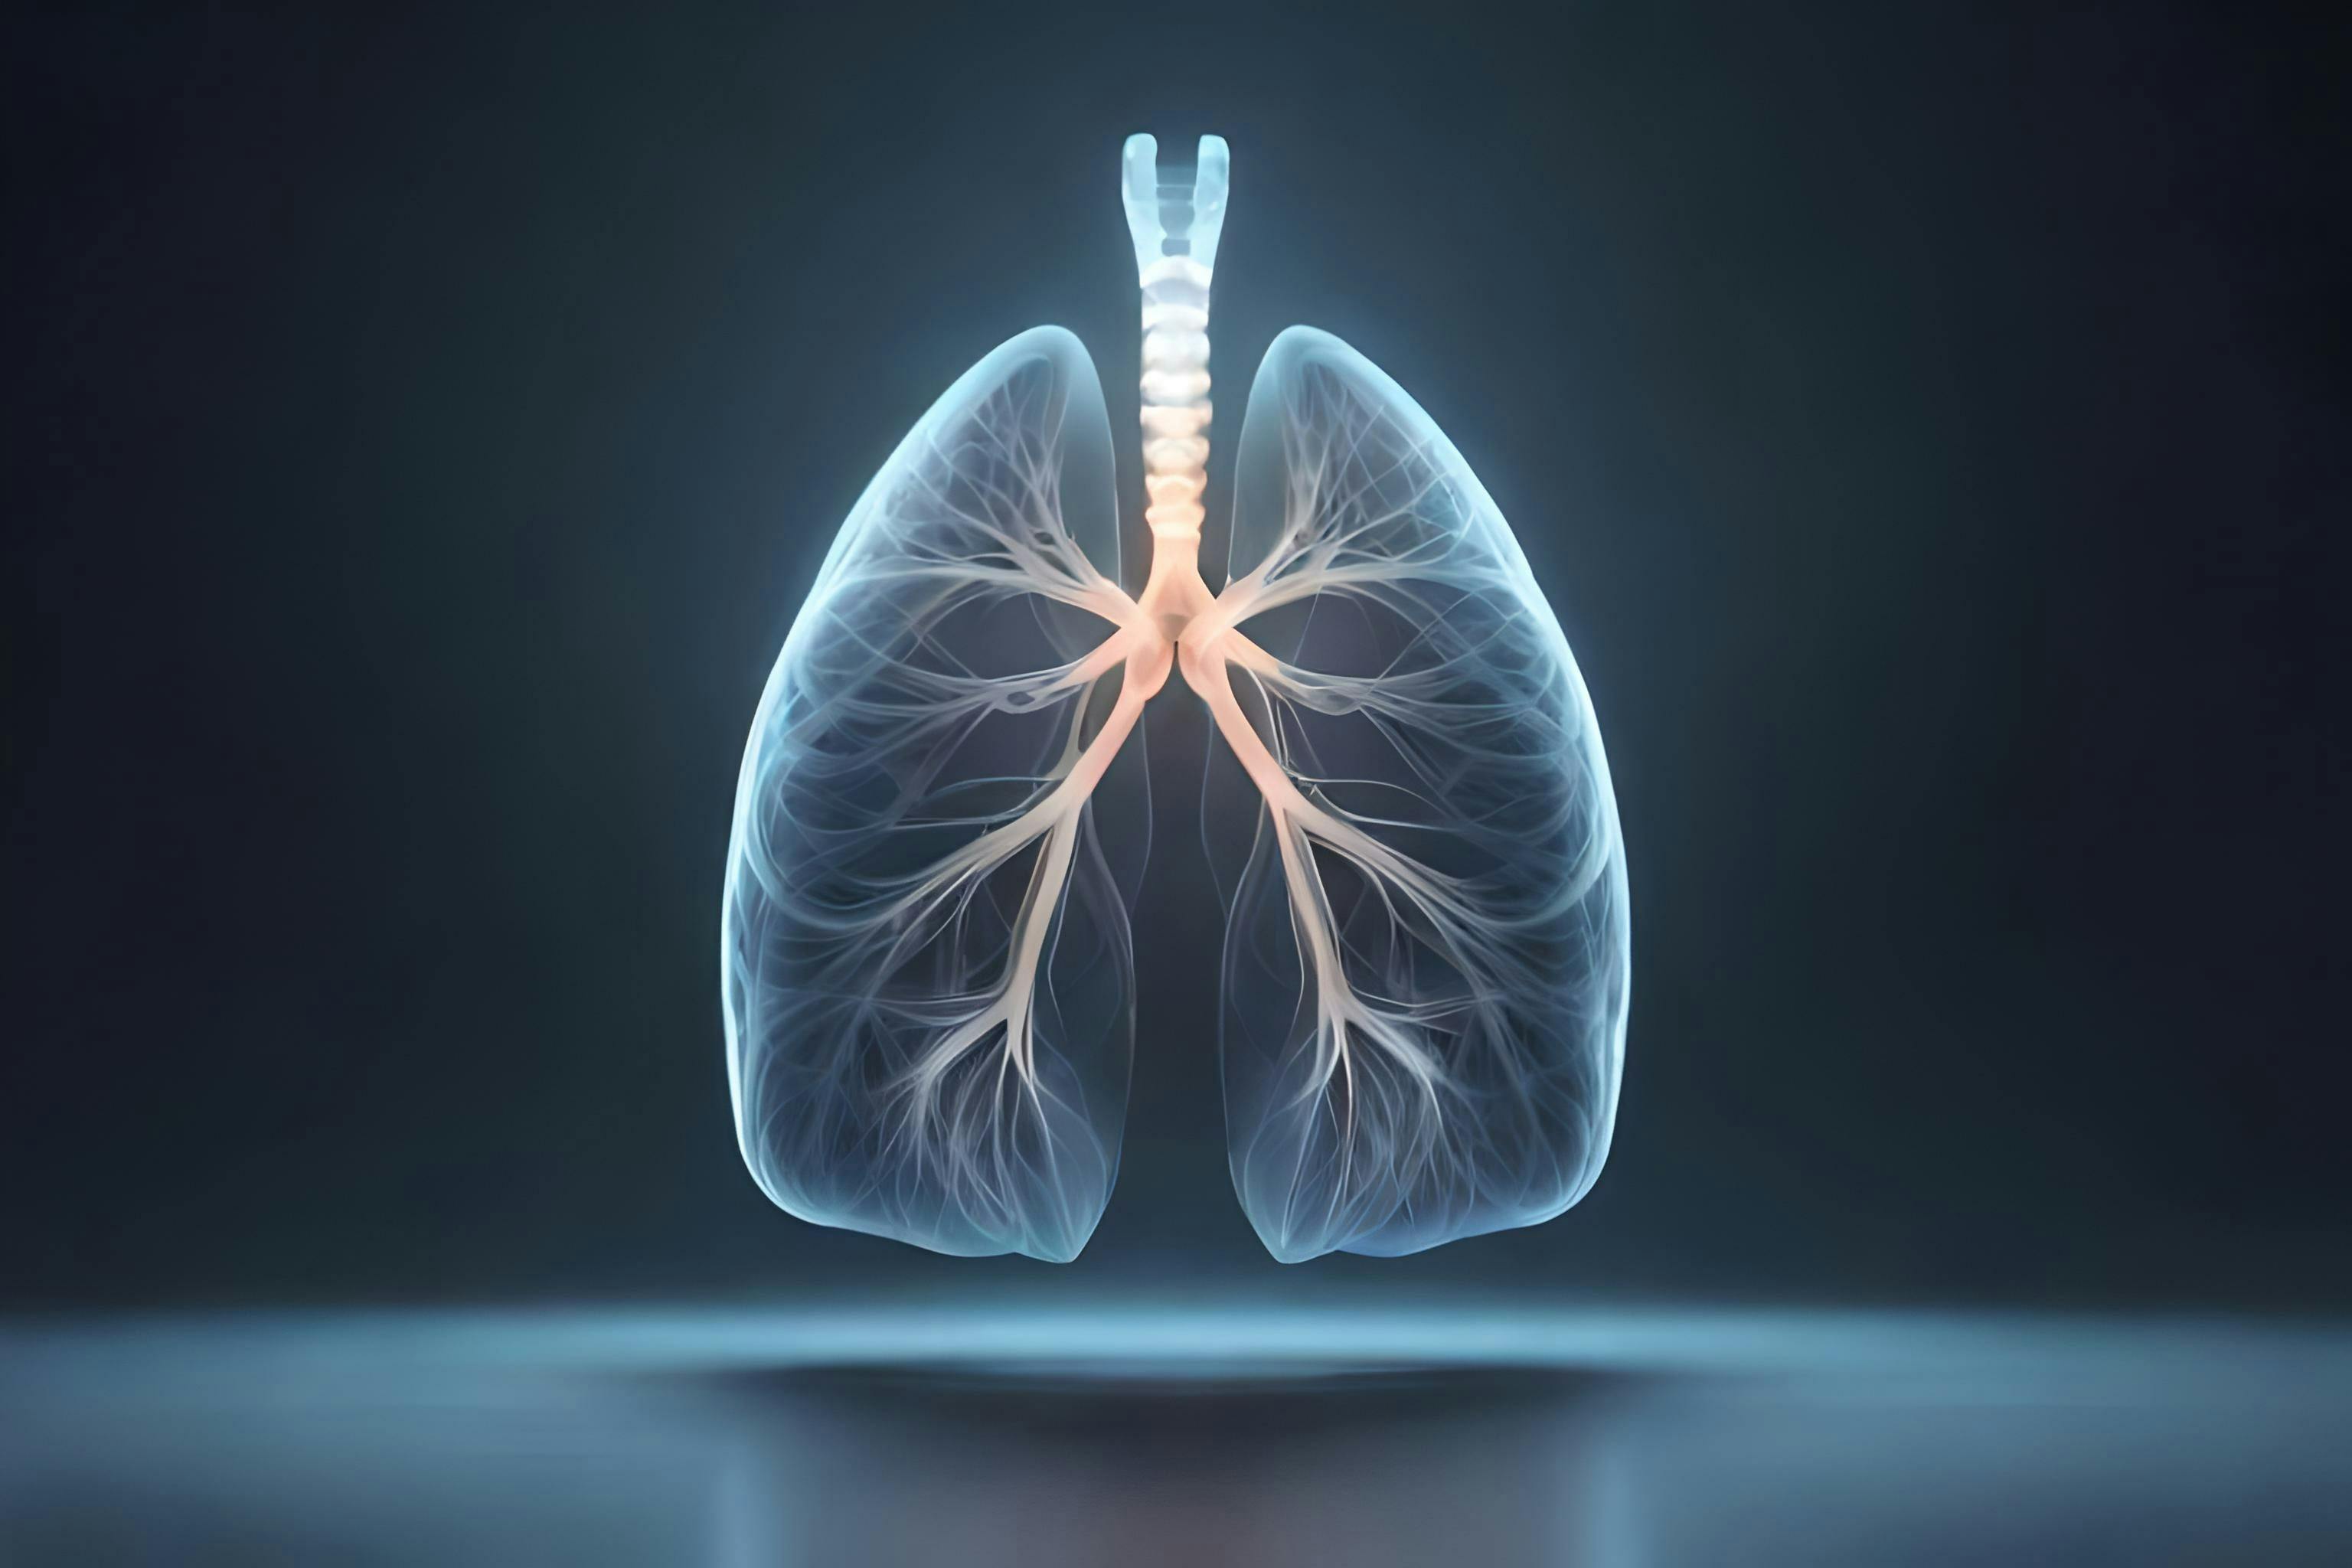 Human anatomy and smoky lungs | Image Credit: © Honey - www.stock.adobe.com